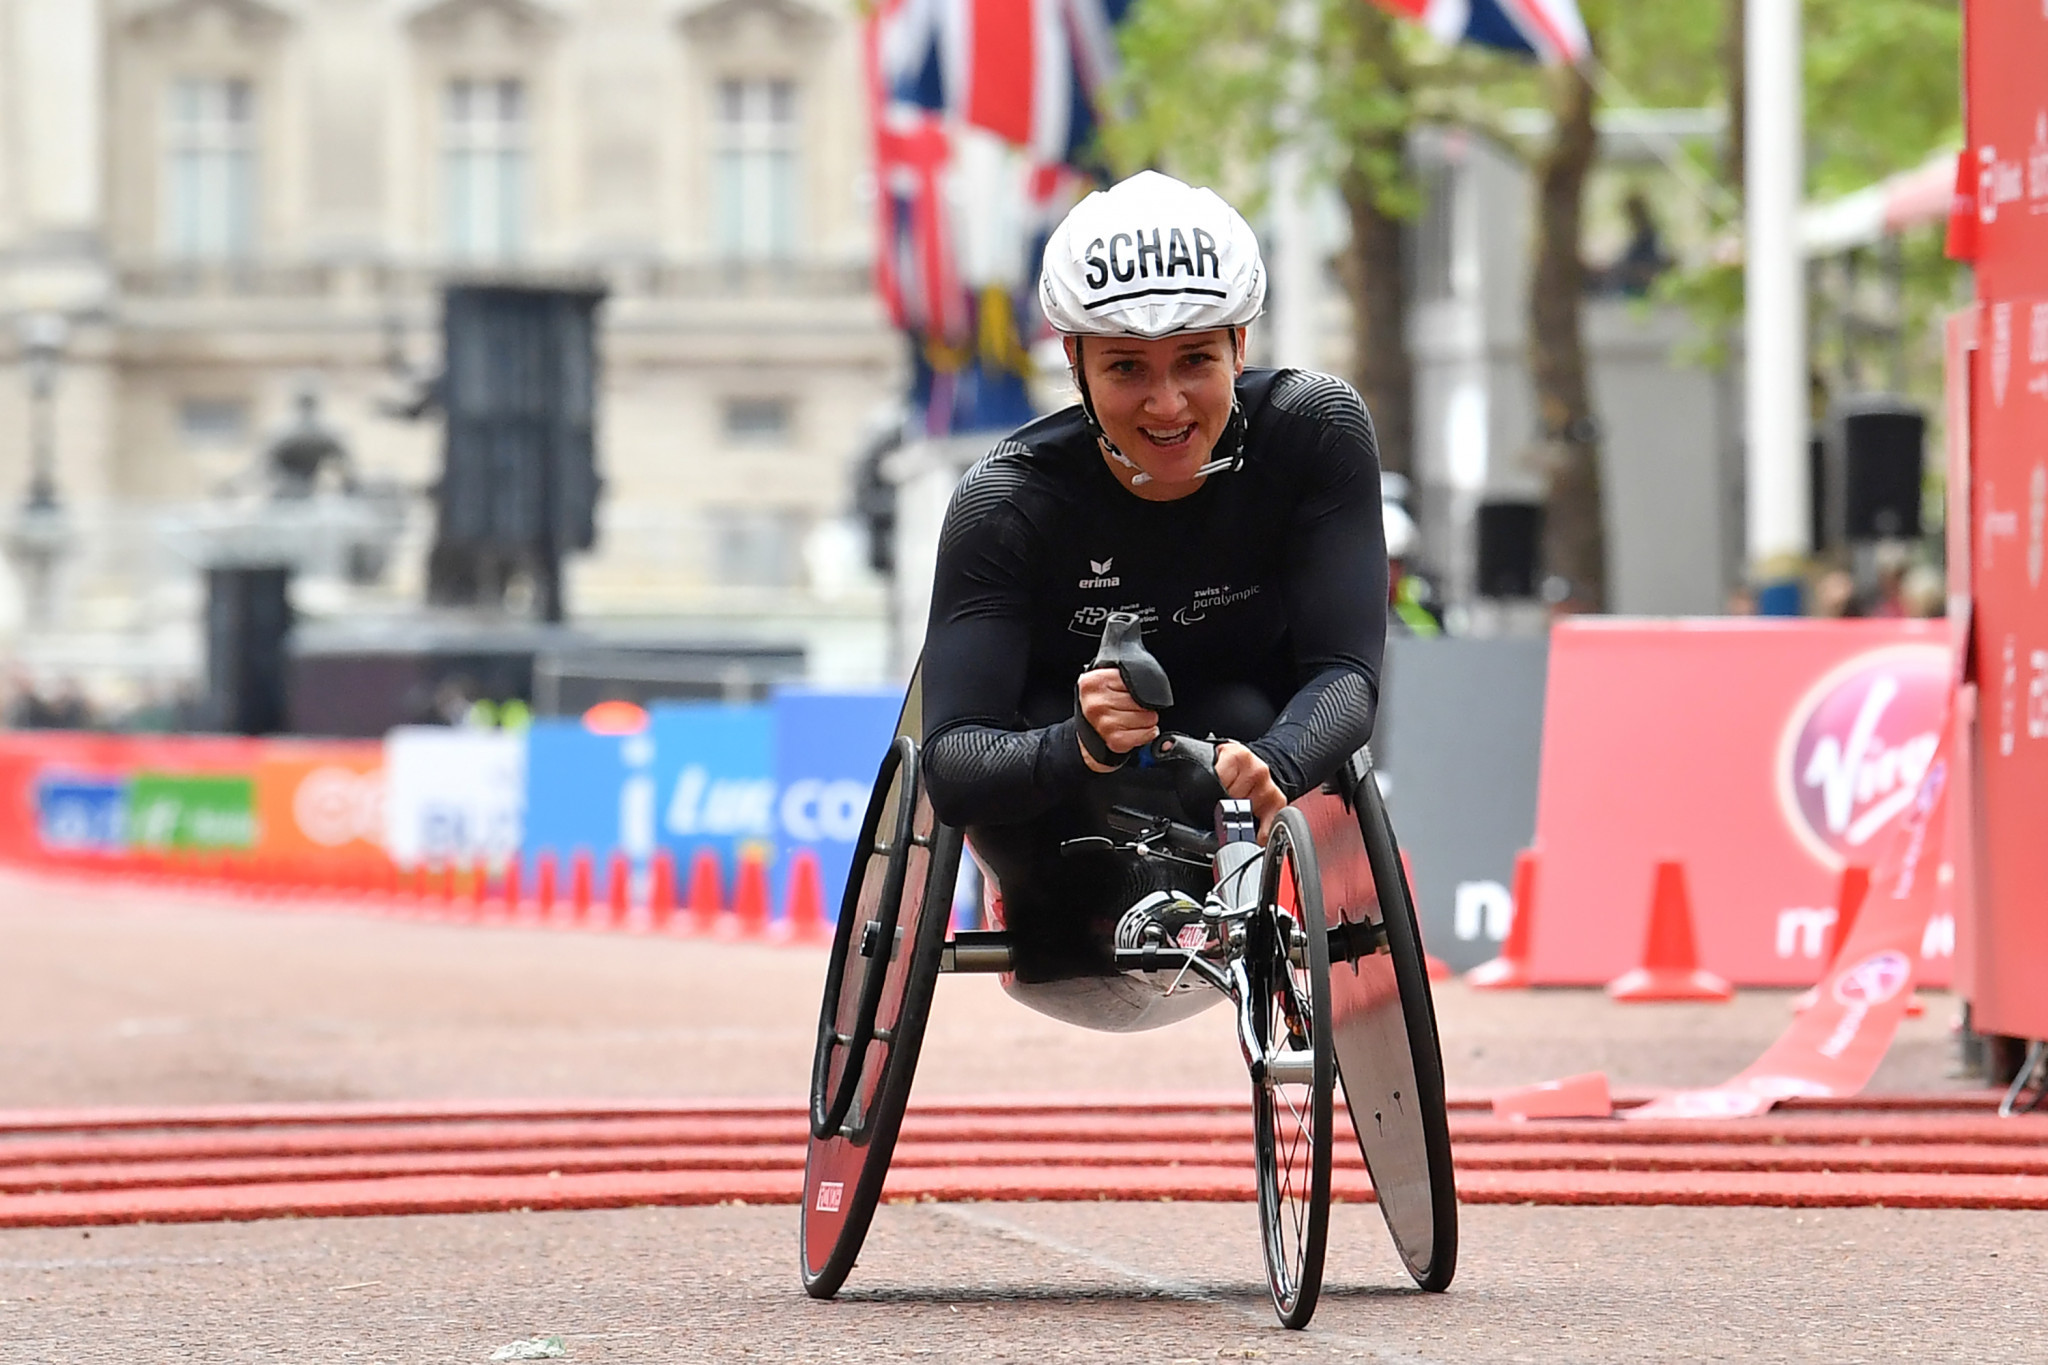 Switzerland's Manuela Schär won all seven women's wheelchair races this season ©Getty Images